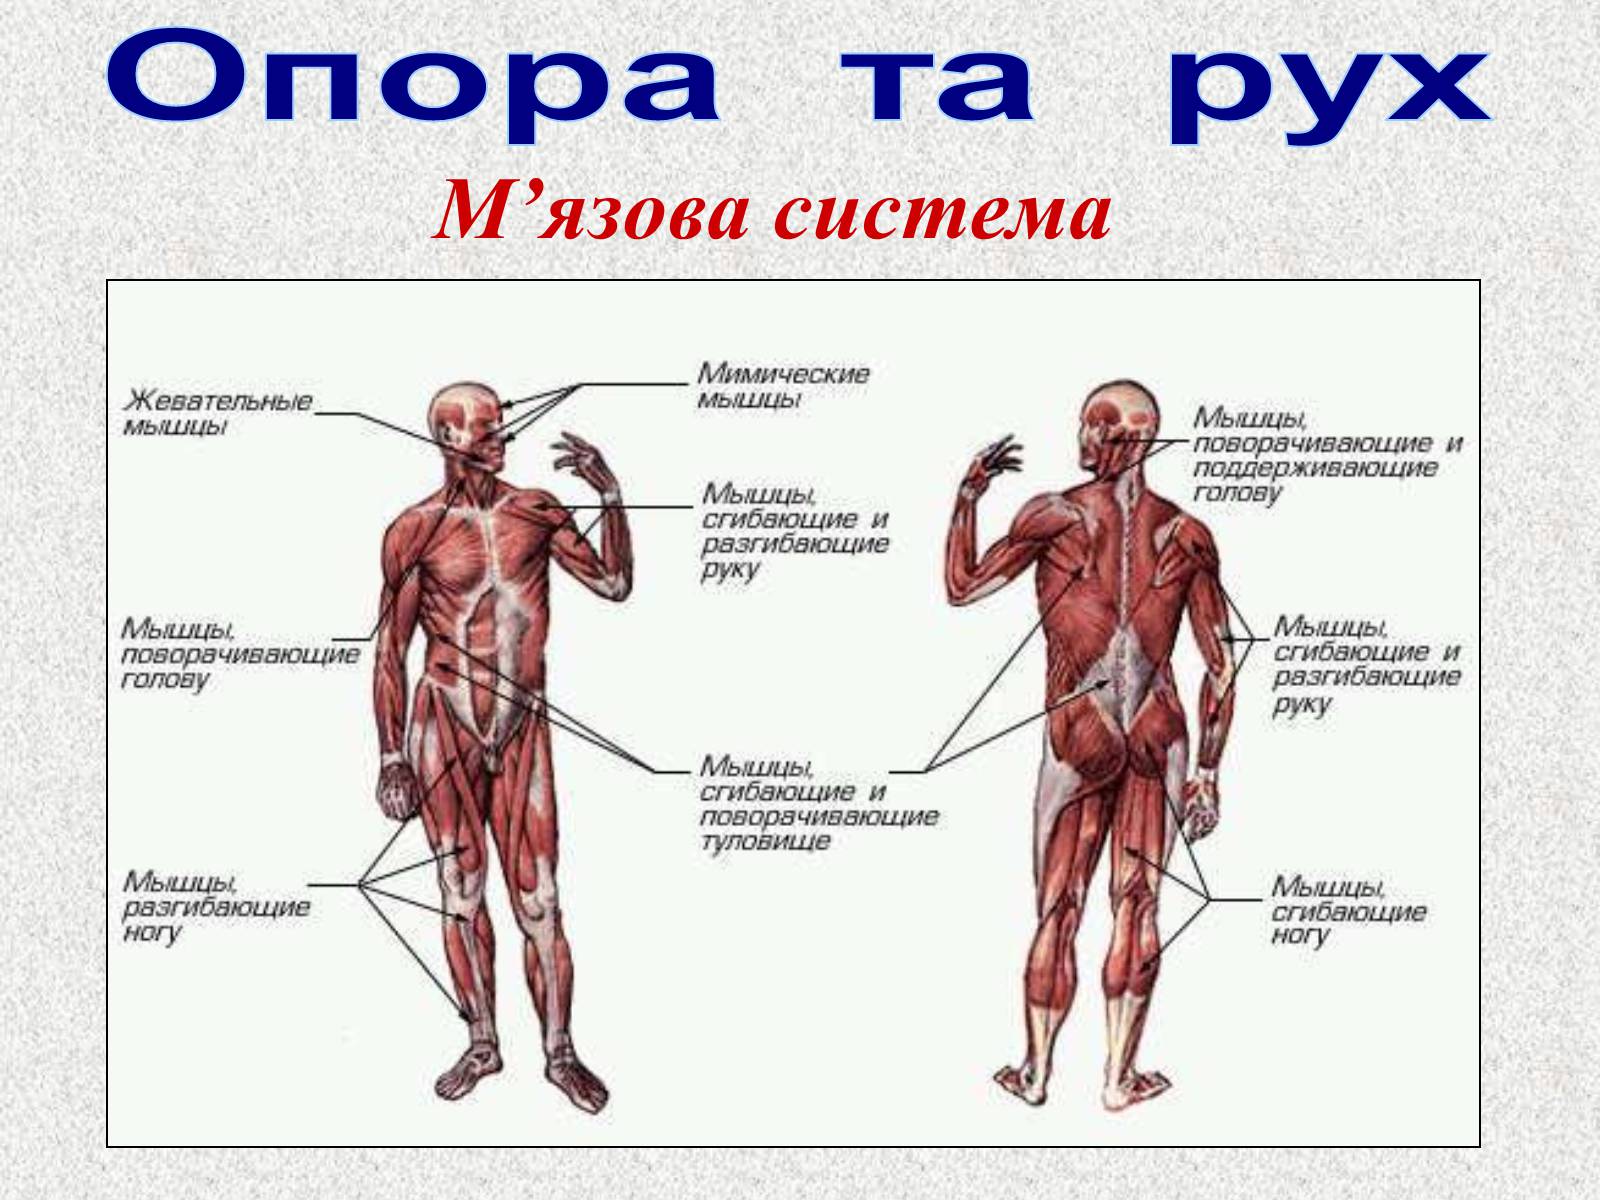 Мышцы тела человека 8 класс биология